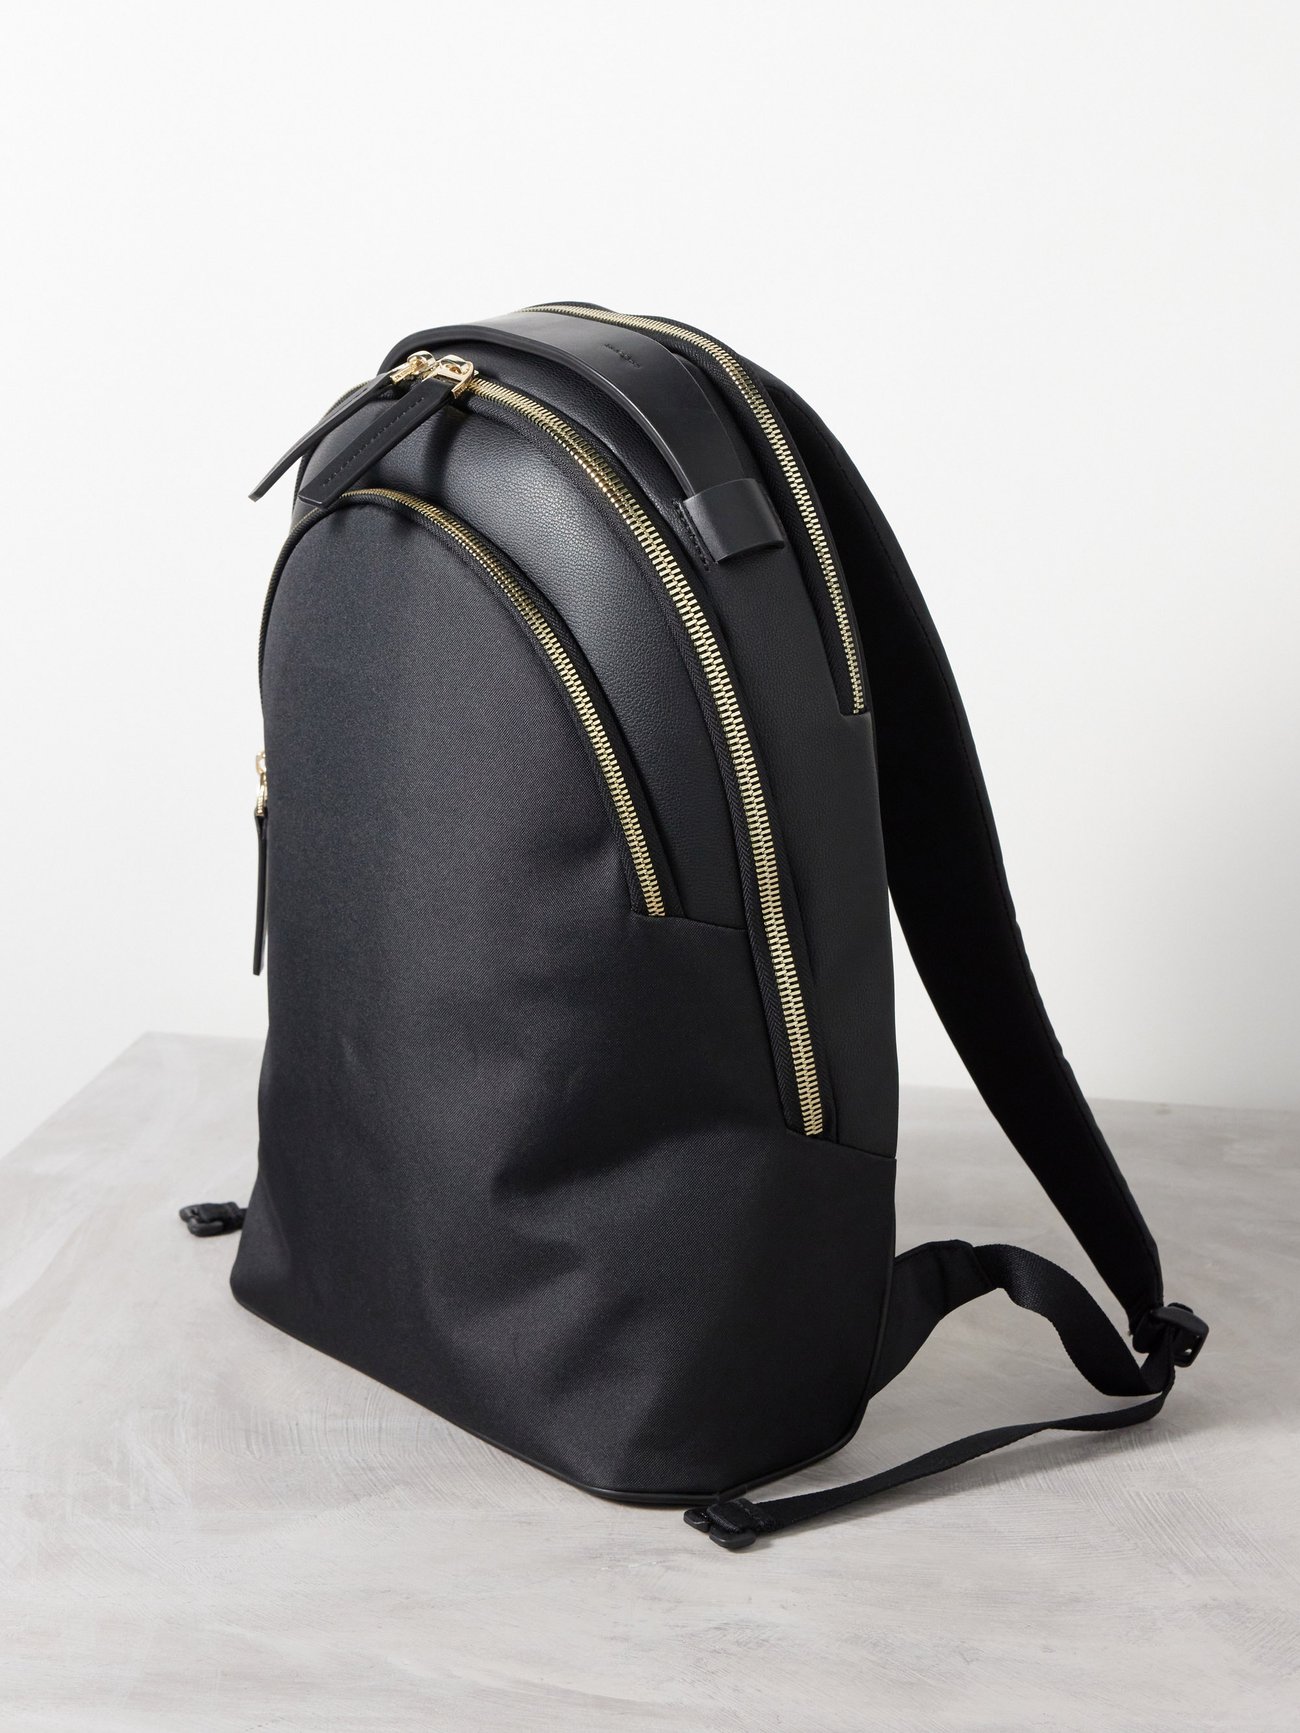 Momentum Backpack, Waterproof Recycled Fabric, Troubadour Goods